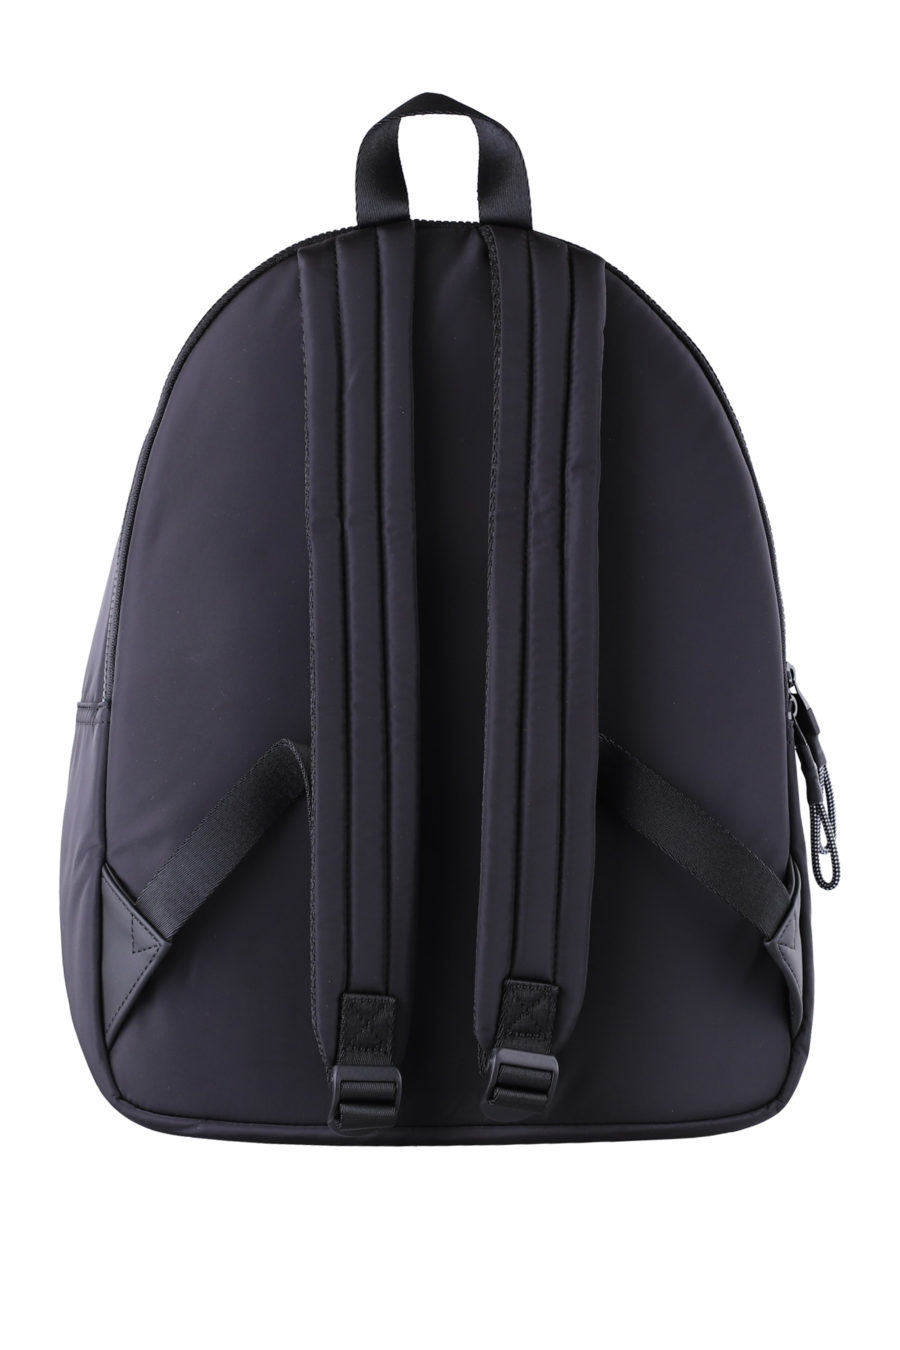 Black backpack with white rubberised logo - 64a904531386ecc73d4d385a64aefdaa359eb2fa